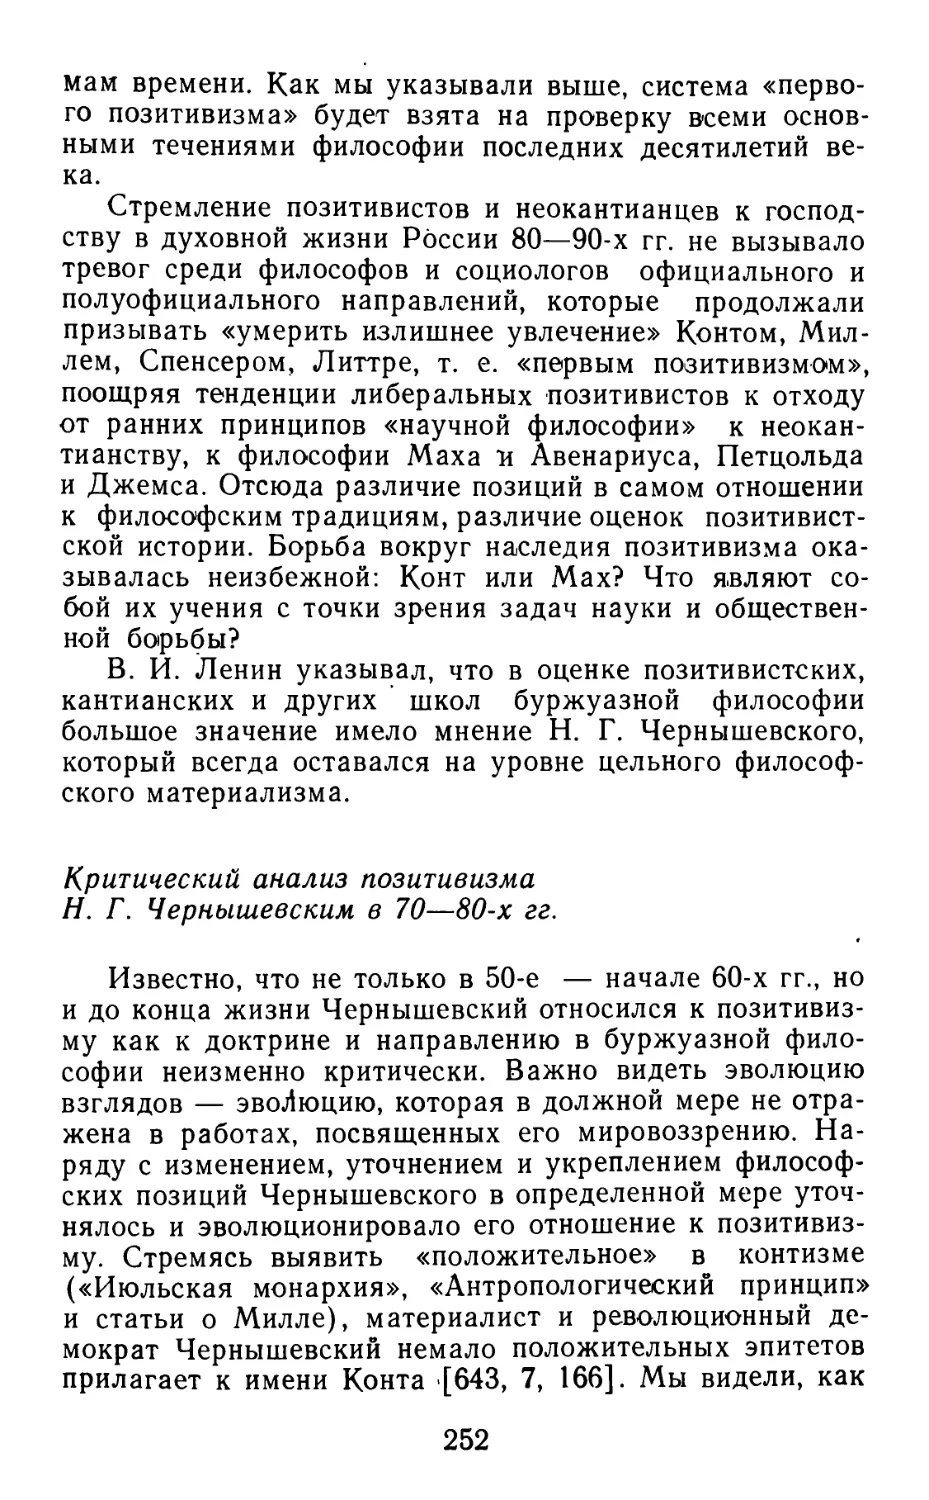 Критический анализ позитивизма Н.Г. Чернышевским в 70-80-х гг.